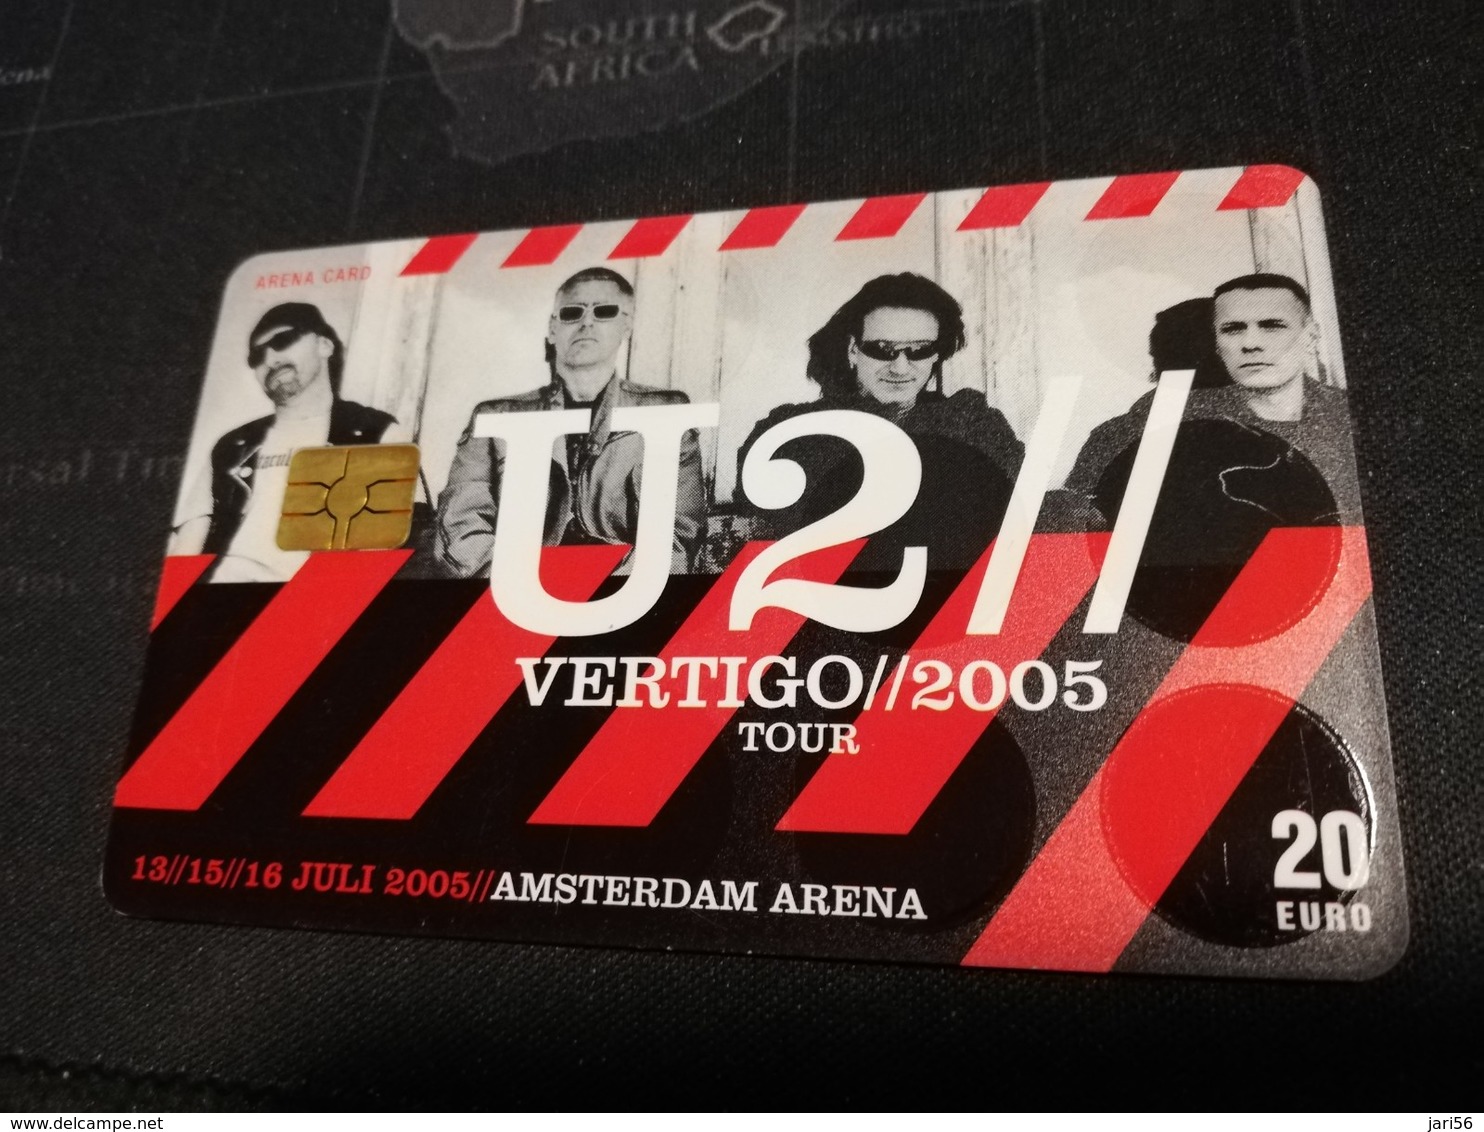 NETHERLANDS  ARENA CARD  U2 VERTIGO  TOUR  2005   €20,- USED CARD  ** 1430** - Pubbliche